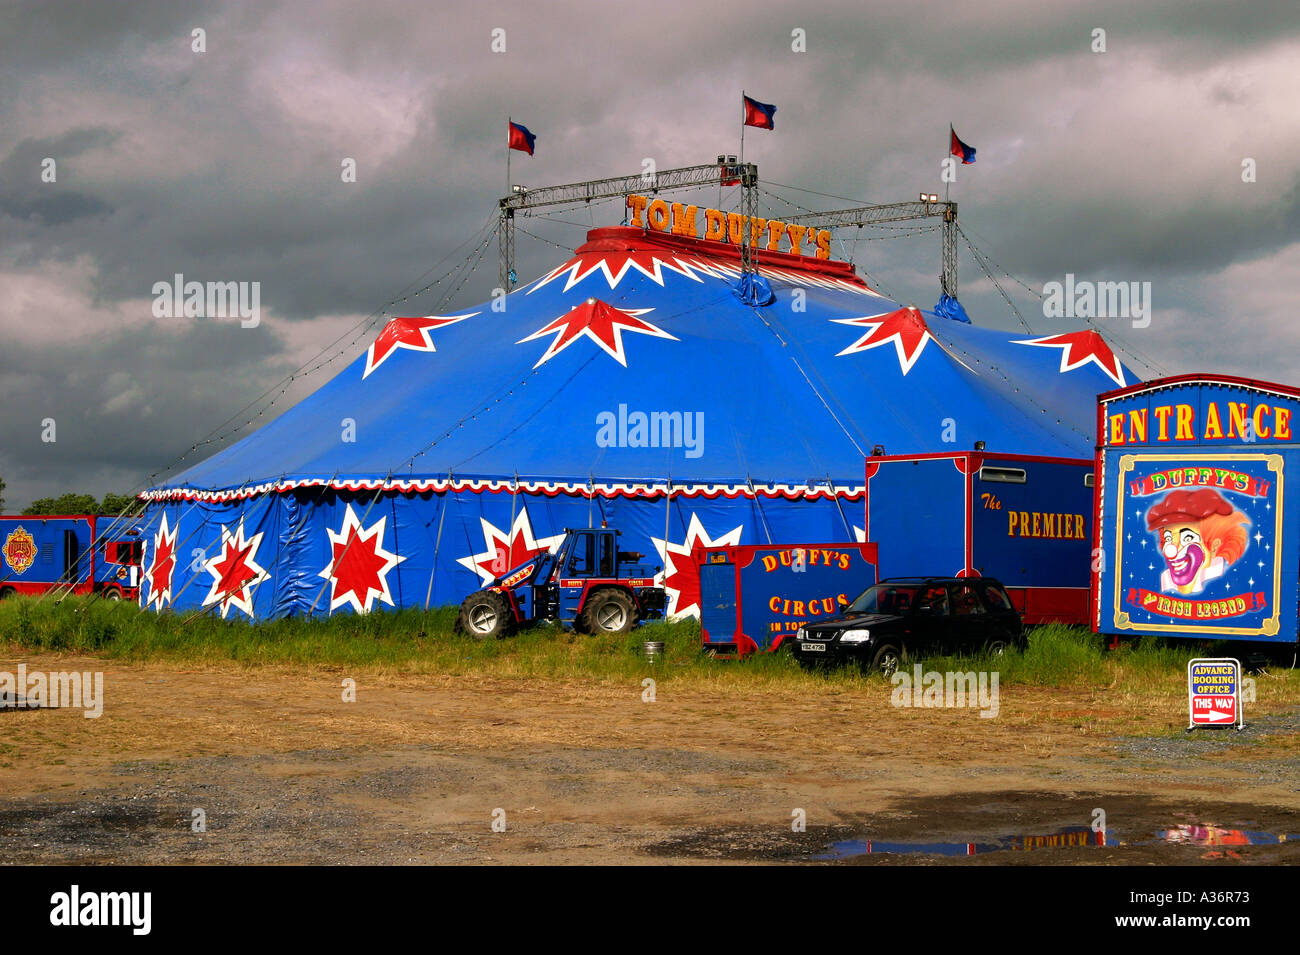 Duffy's Blue Circus Tent Dublin Ireland Stock Photo